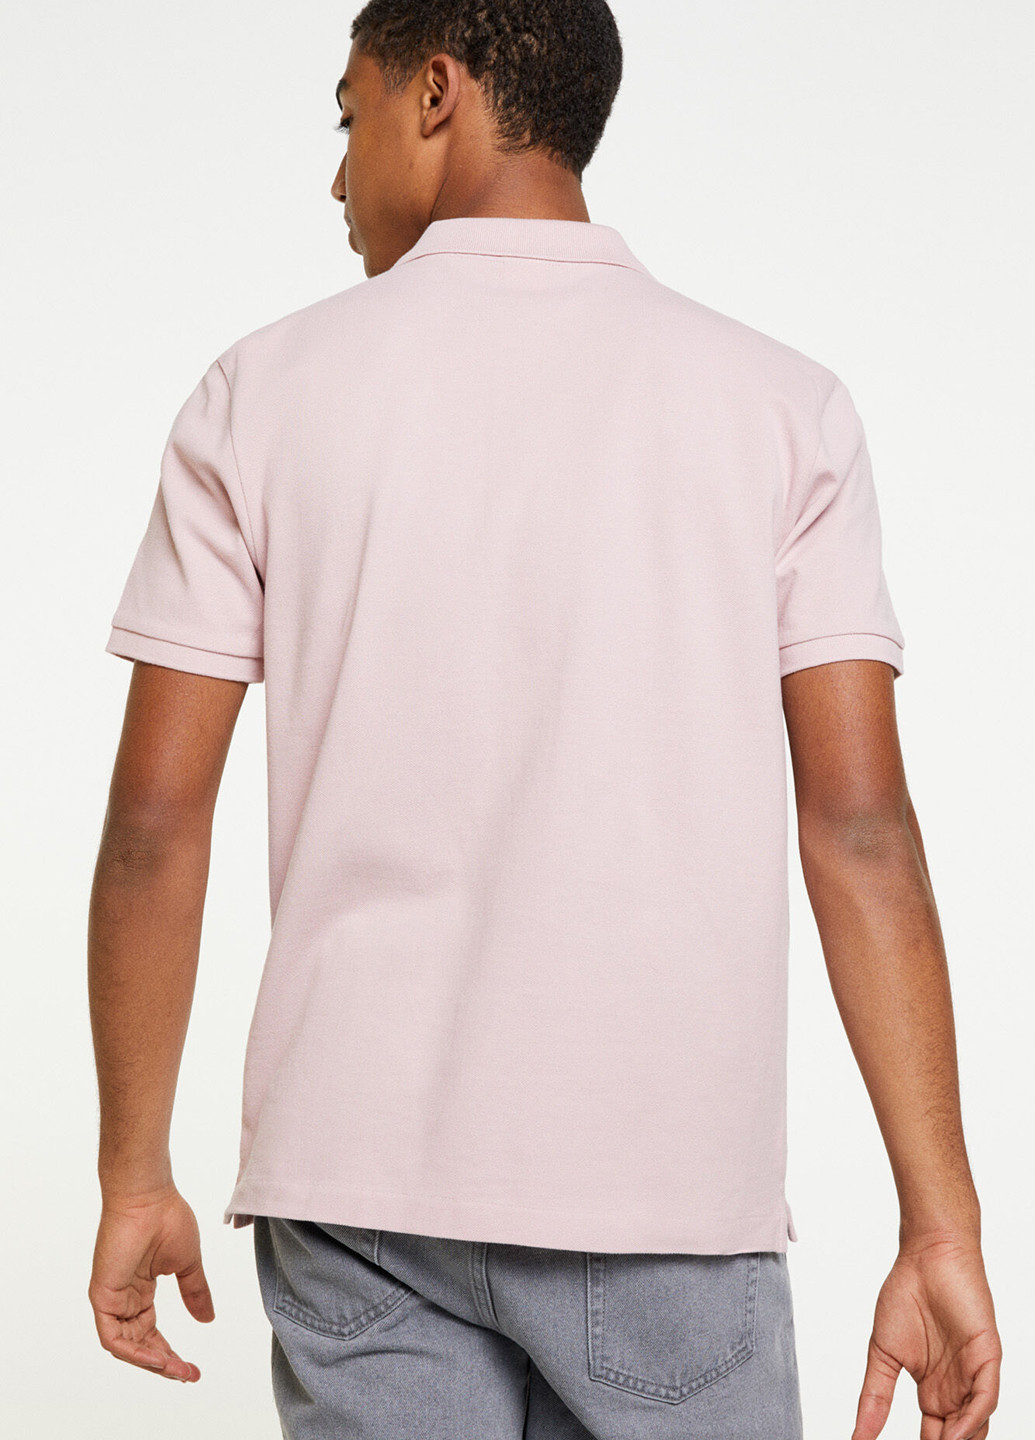 Светло-розовая футболка-поло для мужчин Springfield однотонная